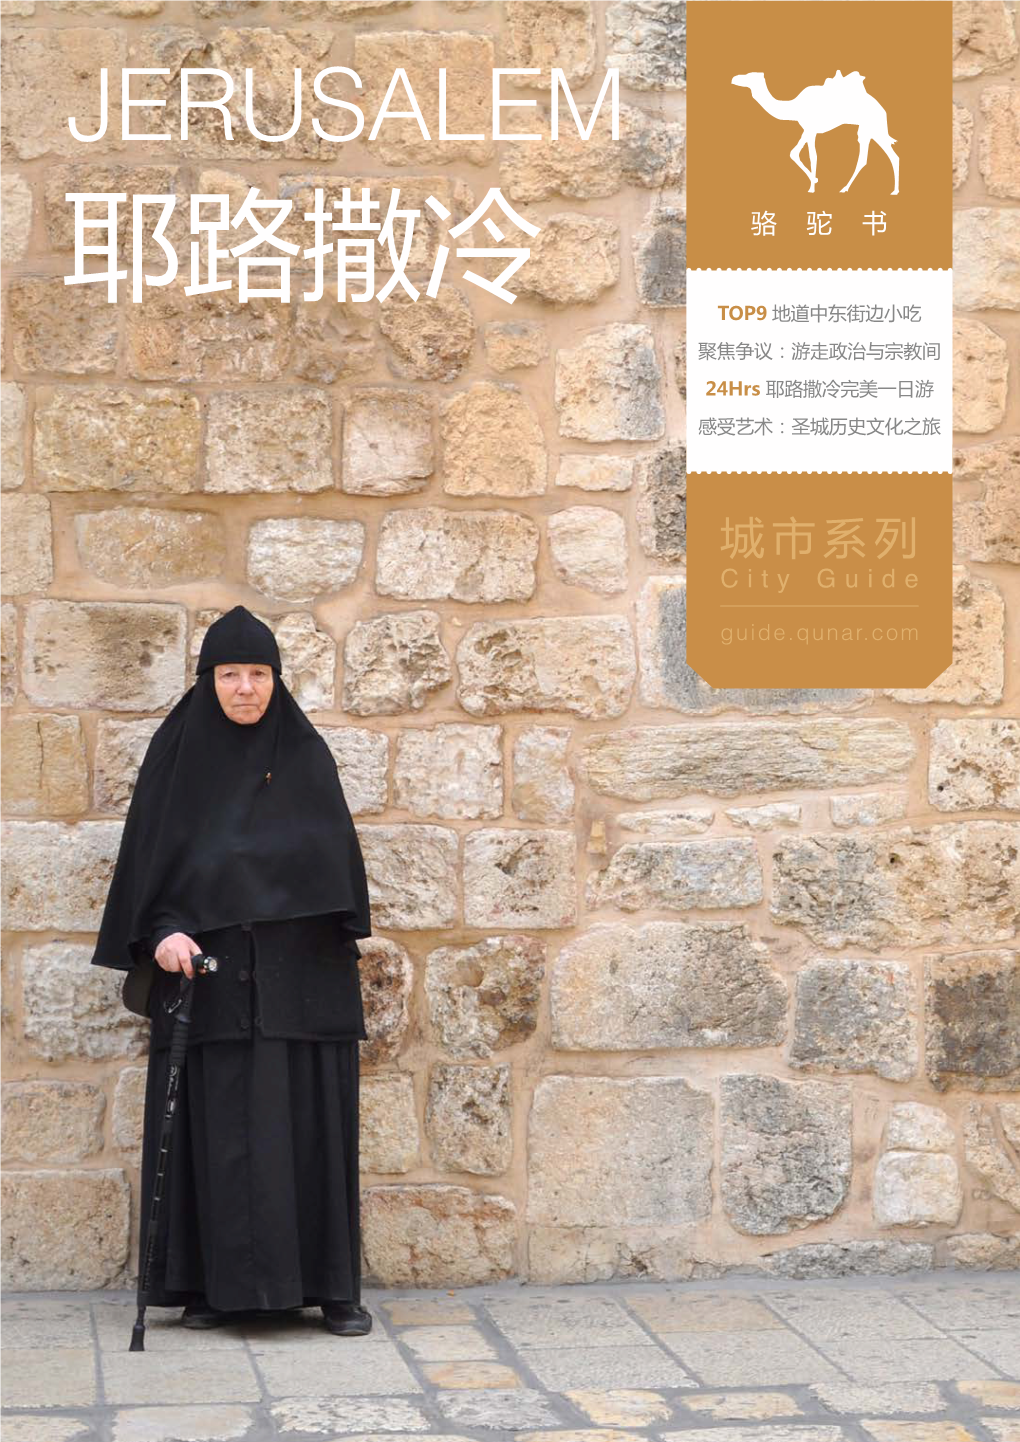 Jerusalem 耶路撒冷 骆驼书 Top9 地道中东街边小吃 聚焦争议：游走政治与宗教间